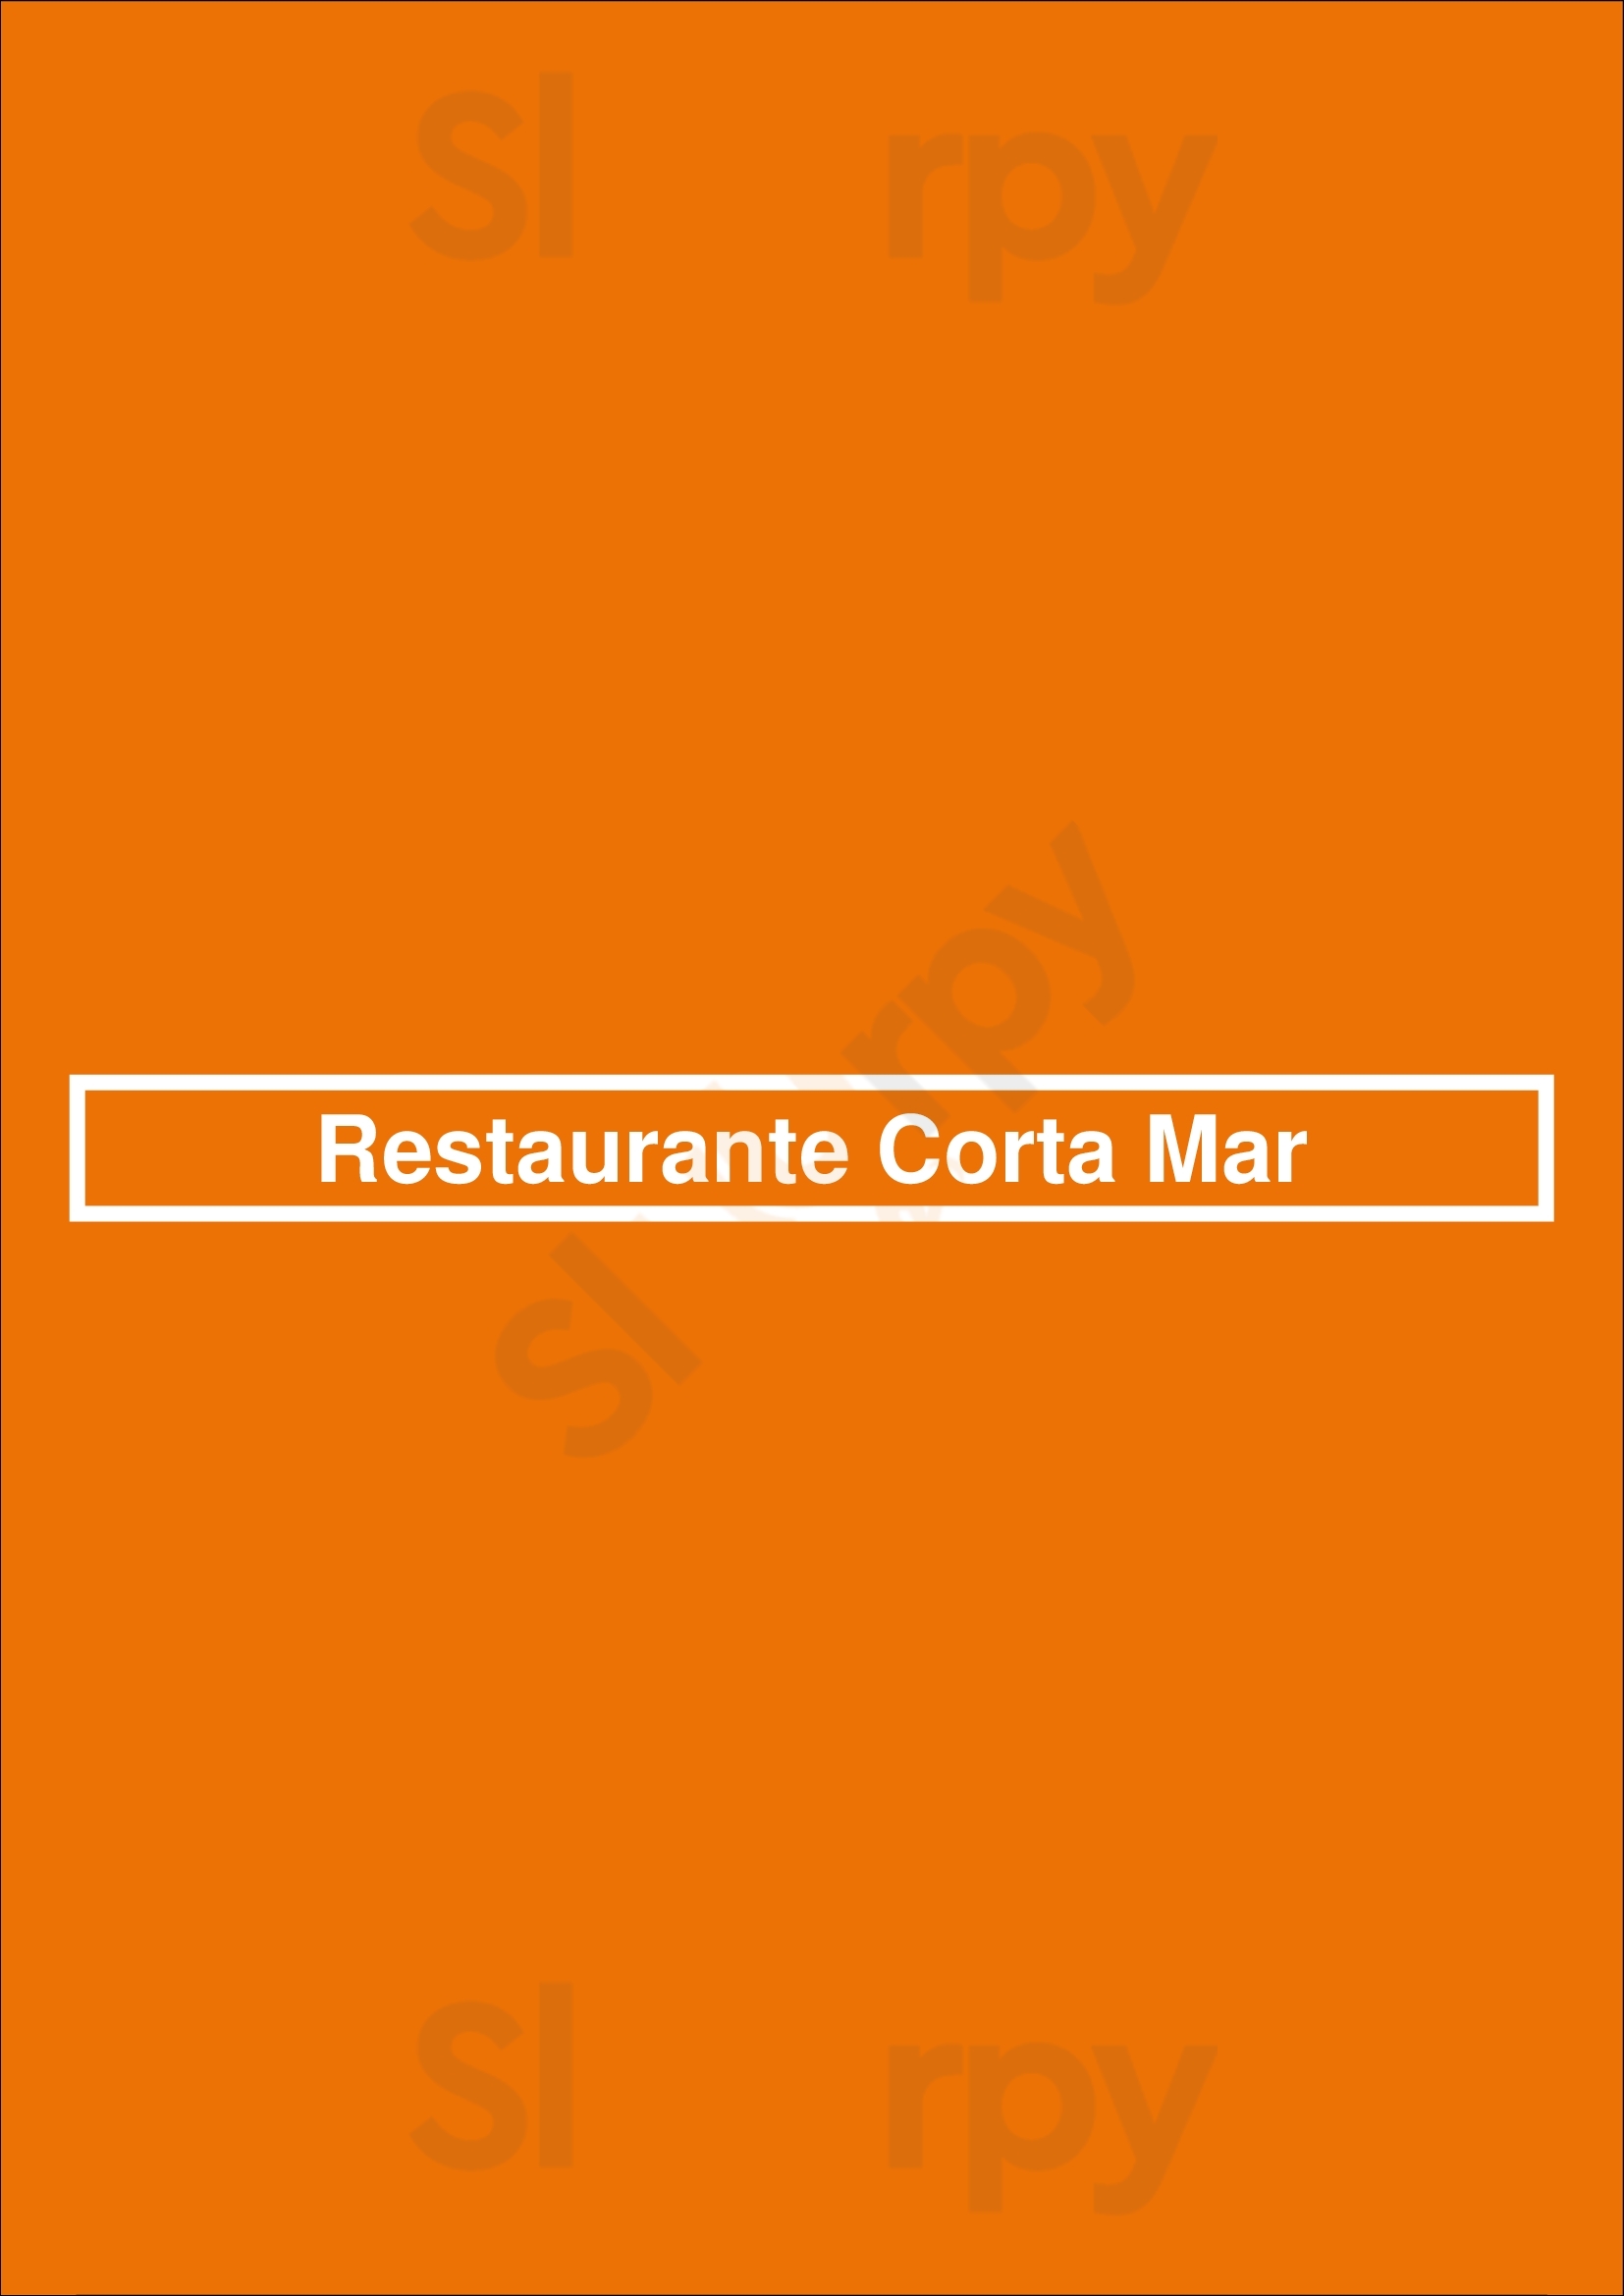 Restaurante Corta Mar Apúlia Menu - 1